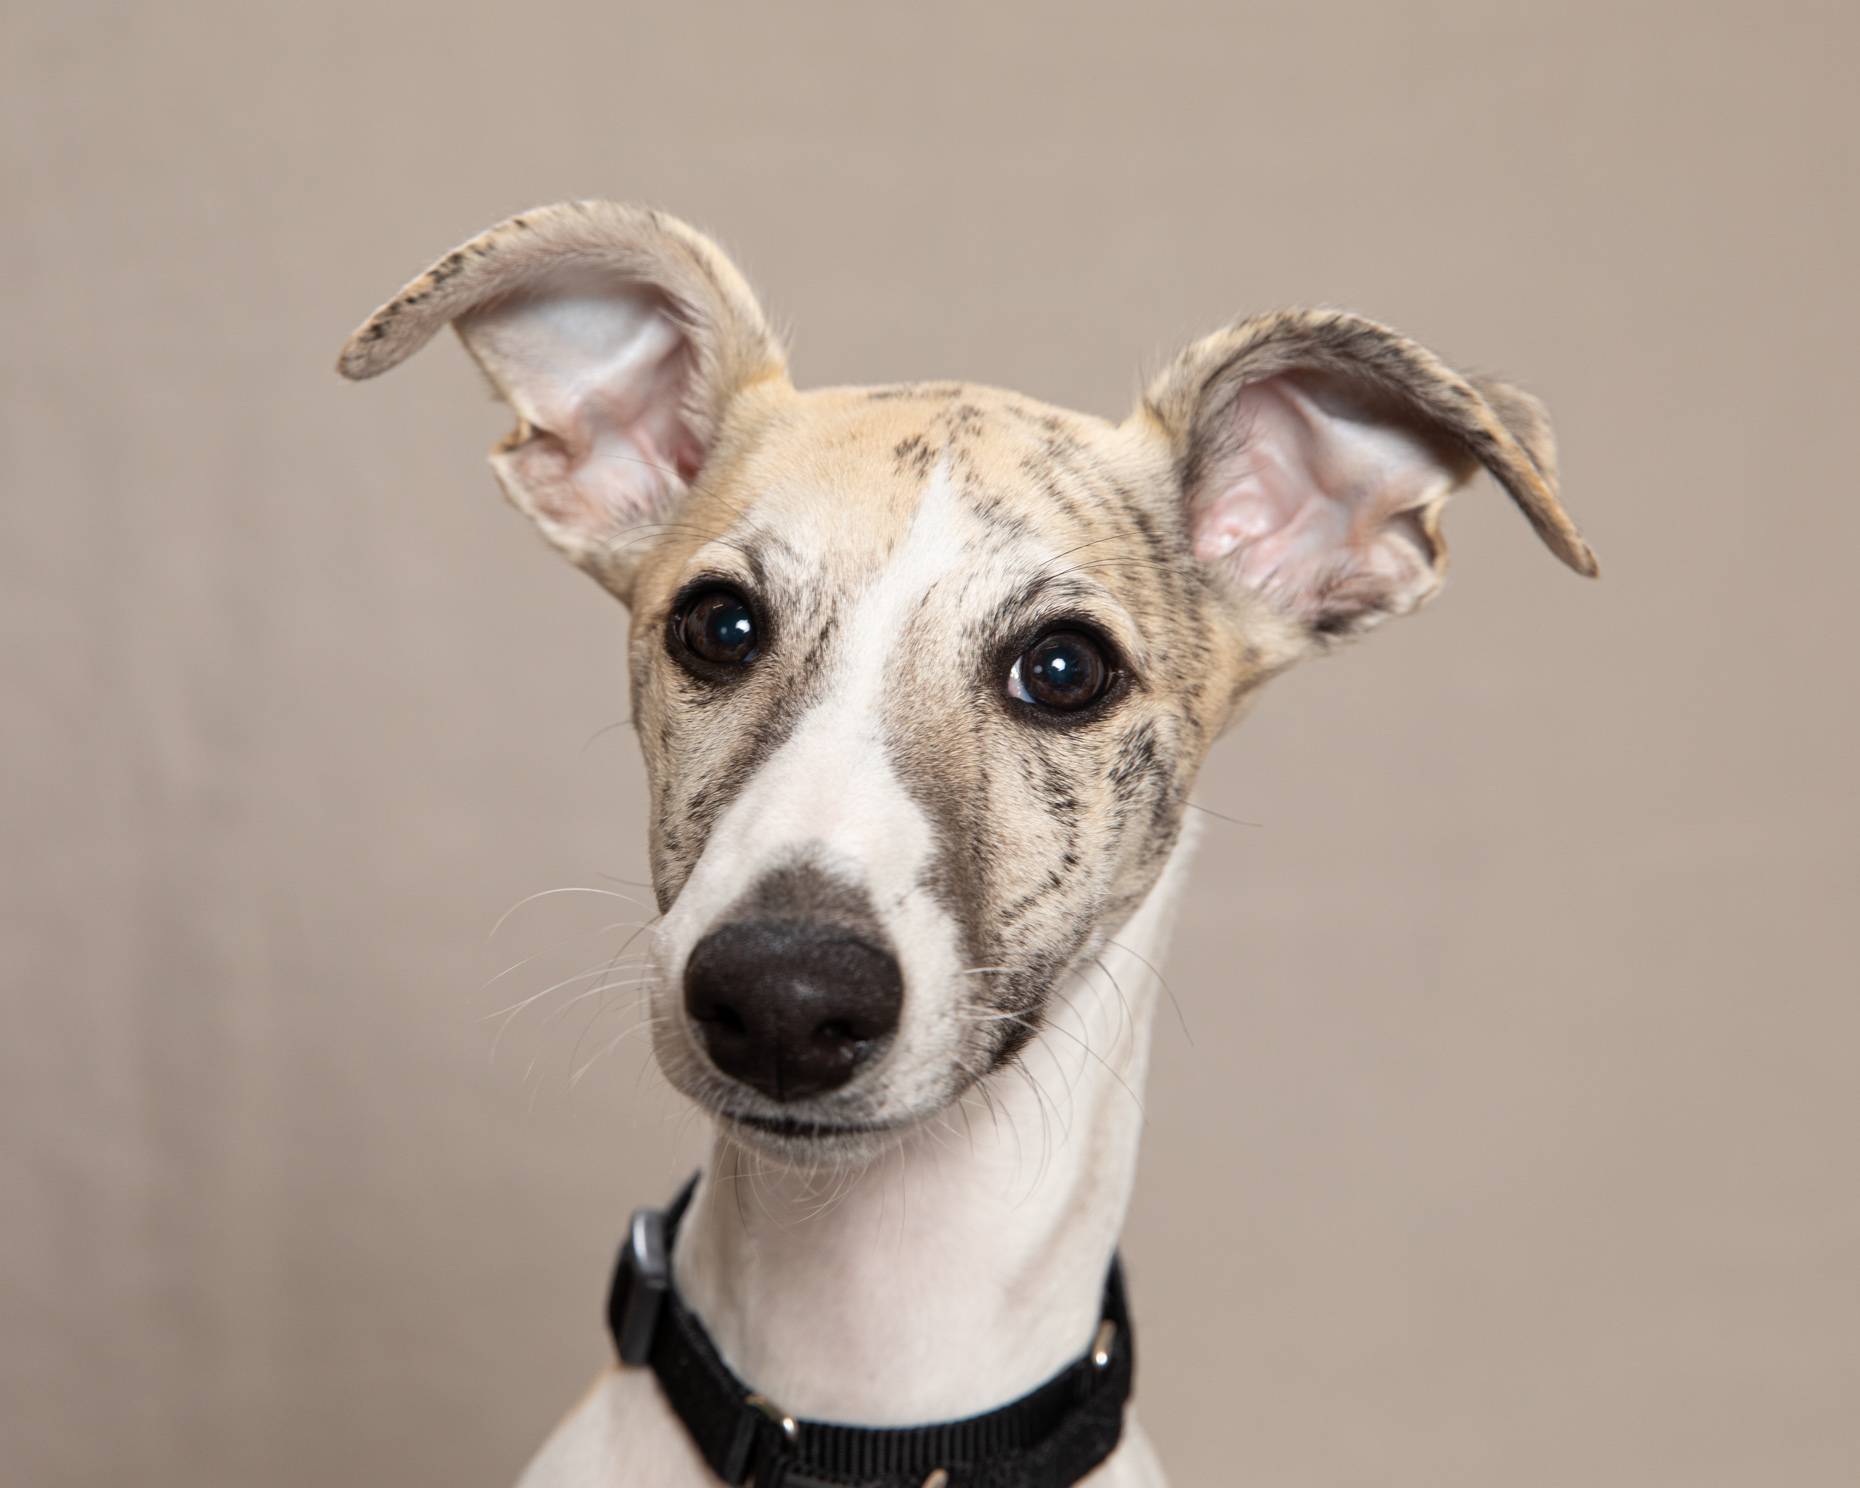 Dog and Pet Photography | Italian Greyhound Puppy bu Mark Rogers